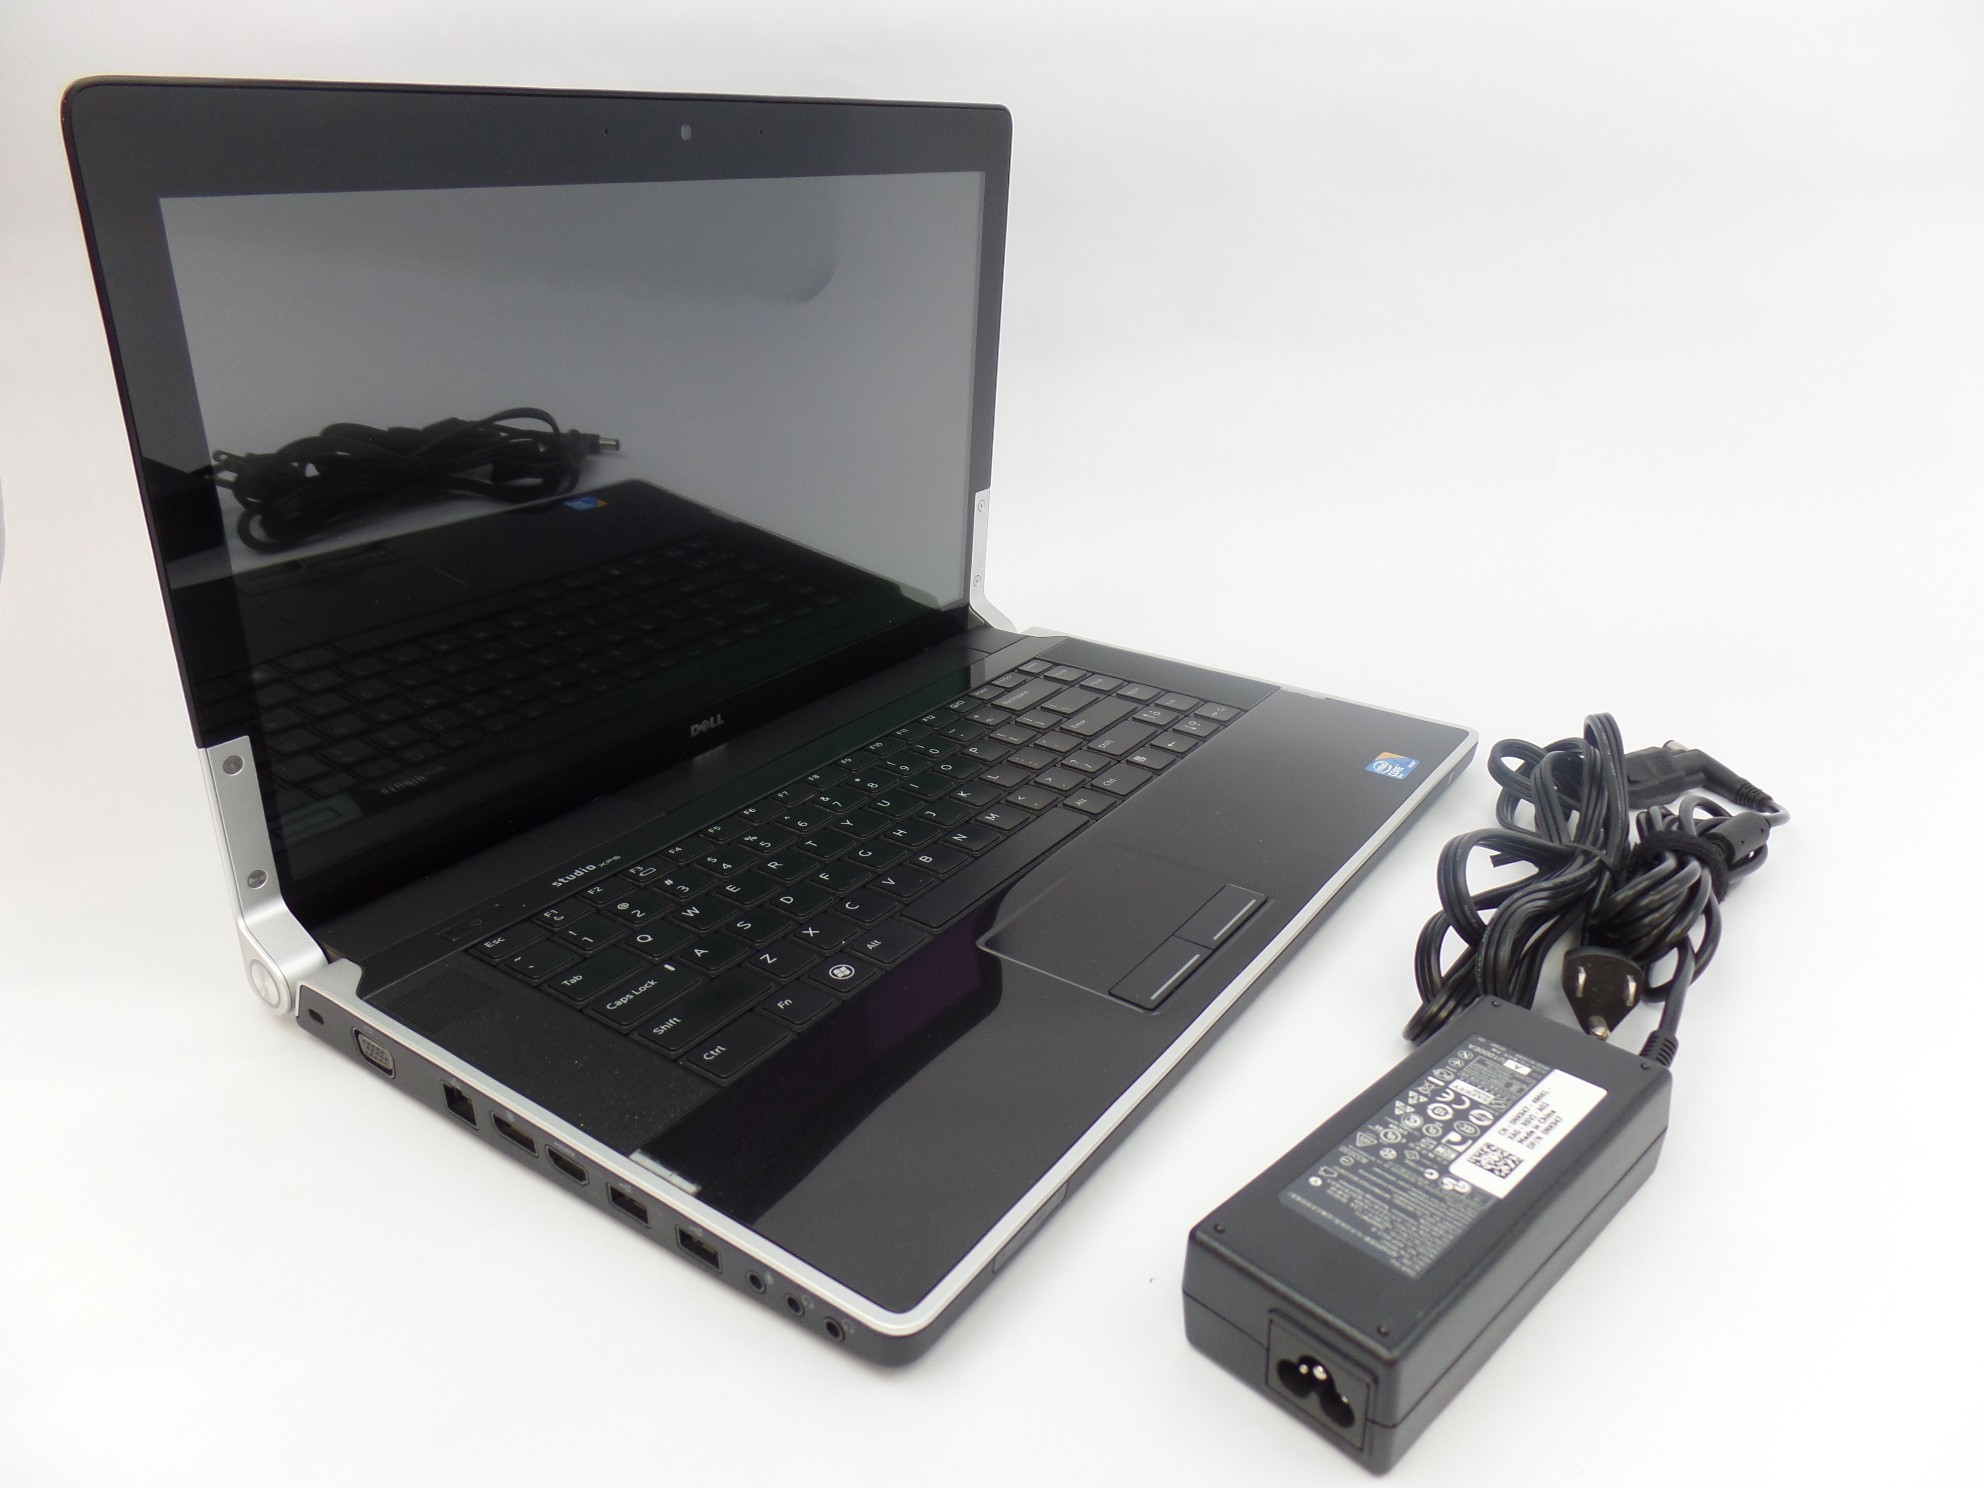 Dell Studio XPS M1640 15.6" FHD C2D P8700 4GB 500GB Radeon HD3670 W7P Laptop